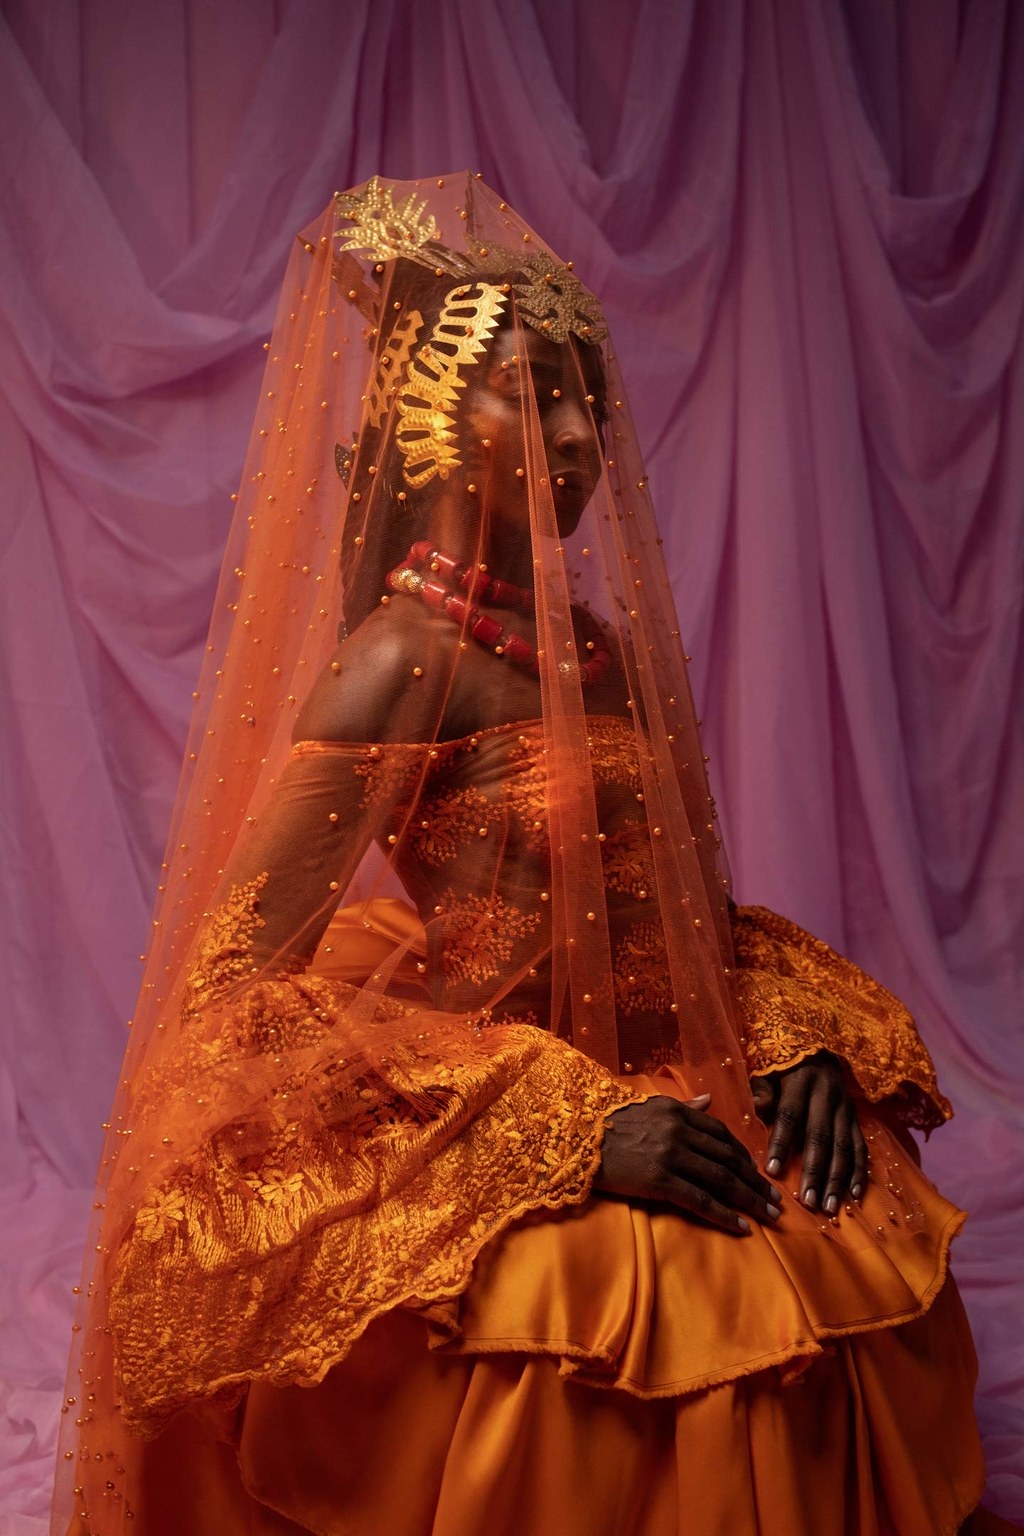 jaiyeorie + Nigerian Photographer Lakin Ogunbanwo chats with Vogue Italia about his New Series “e wá wo mi”  @vogueitalia